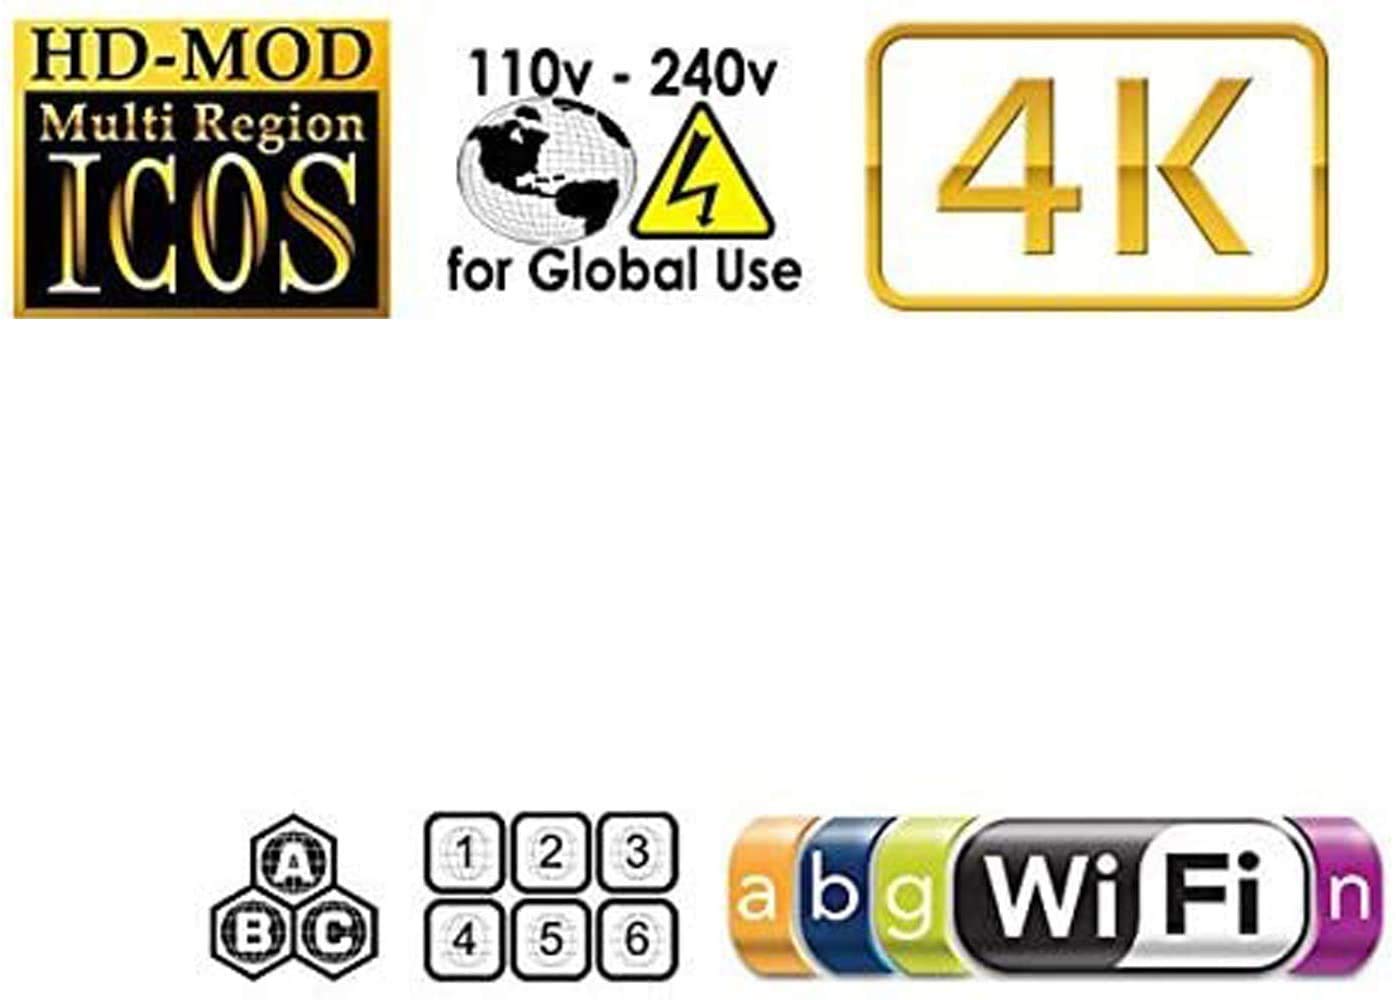 DP-UB9000P-K Region Zone Code Free 4K Ultra HD Blu Ray Player with OREI - 4K UHD - WiFi - PAL/NTSC - 110V Only - USA Voltage